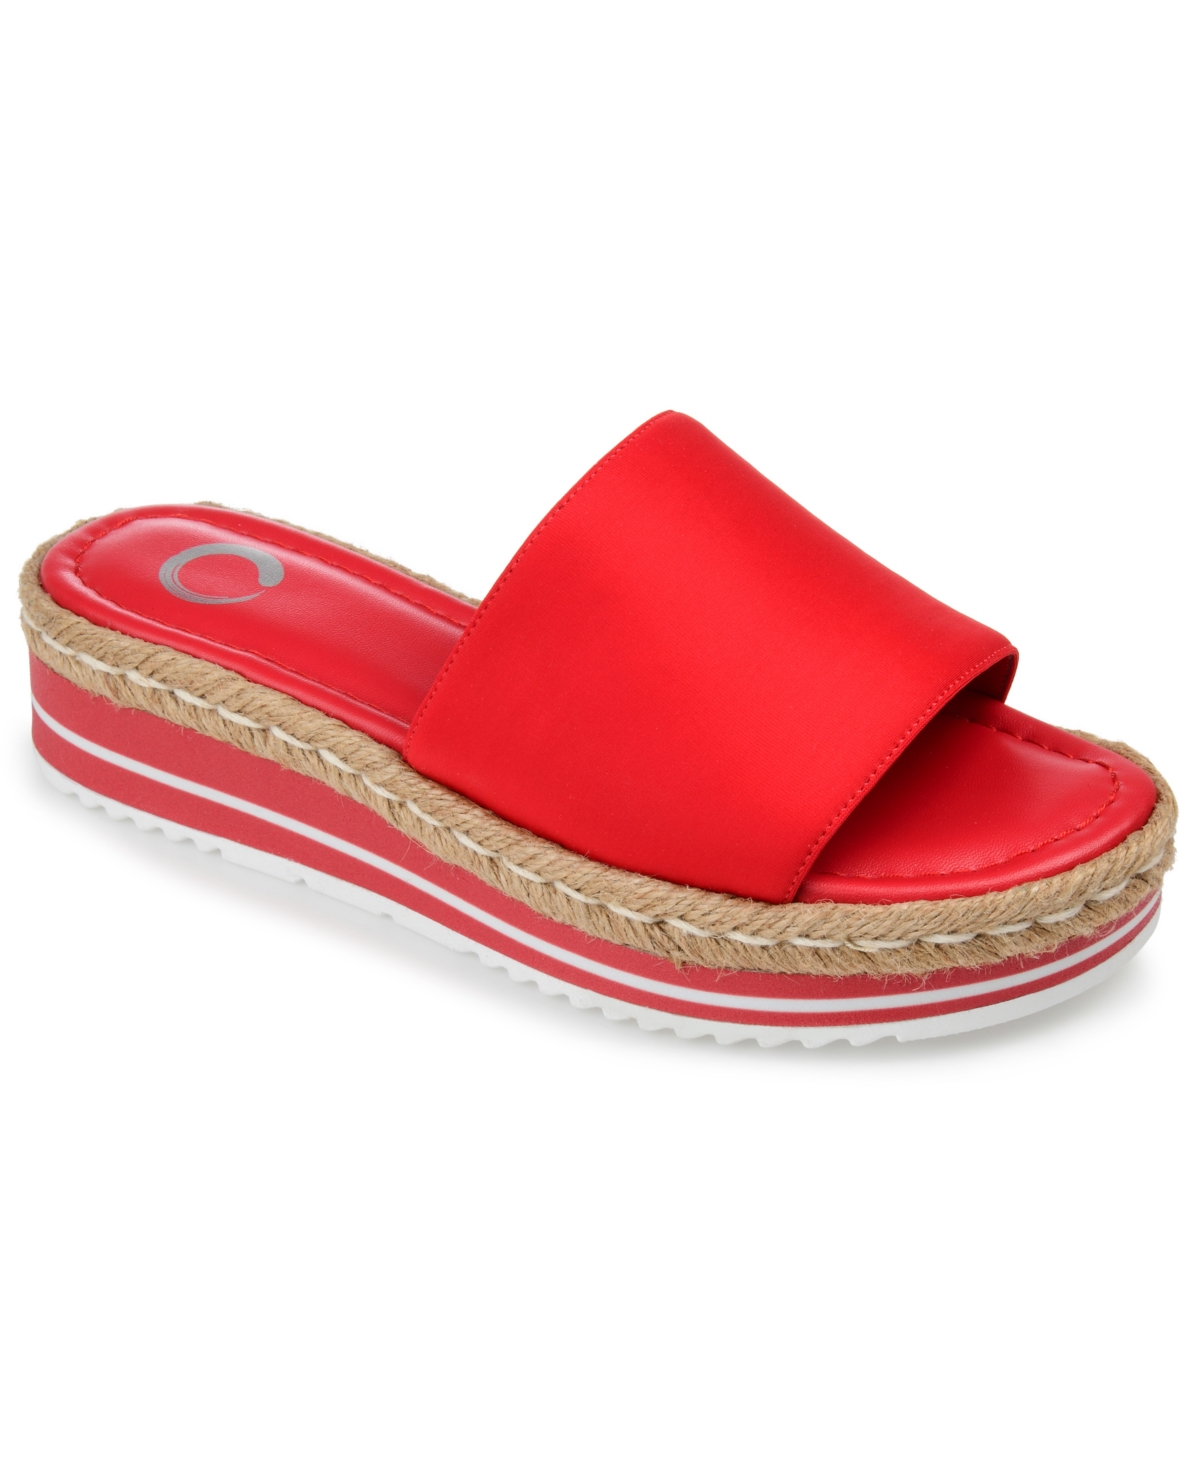 Women's Rosey Espadrille Platform Wedge Sandals - Red